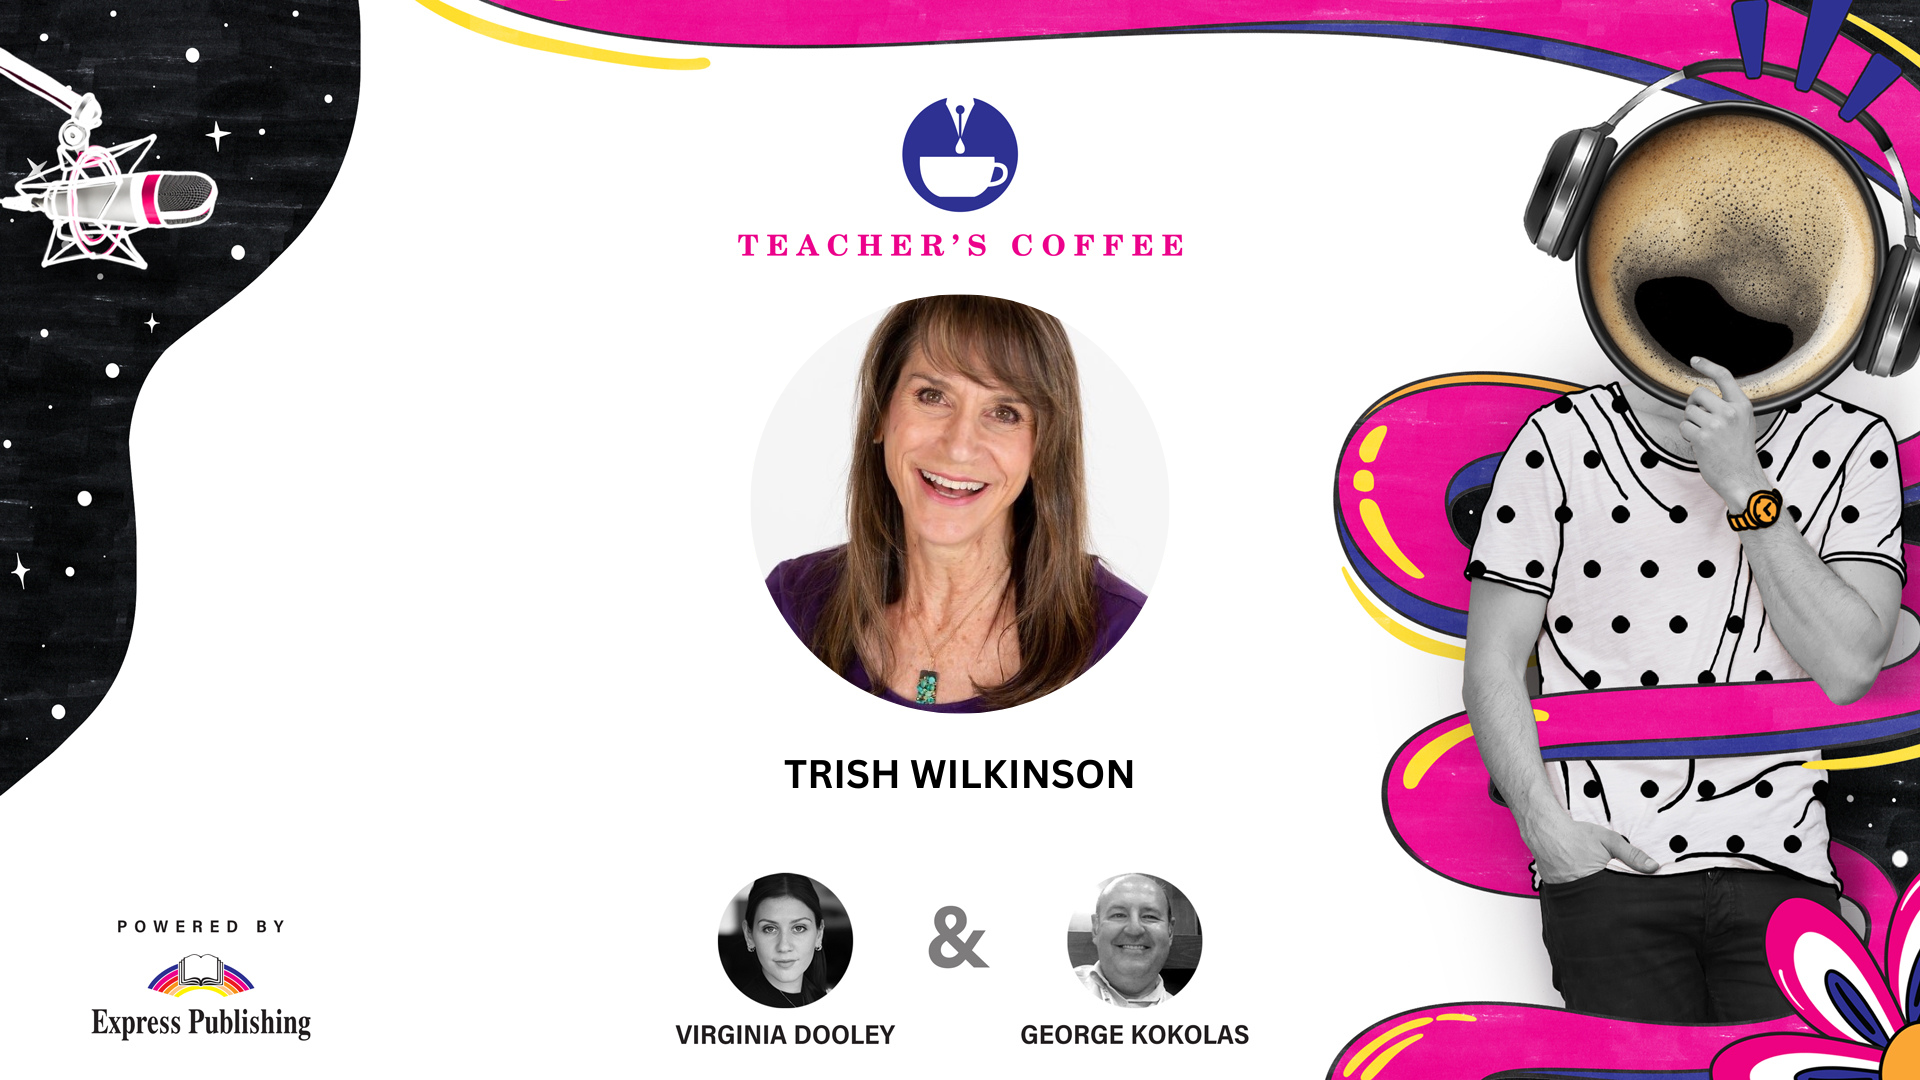 S07E19 Teacher's Coffee with Trish Wilkinson